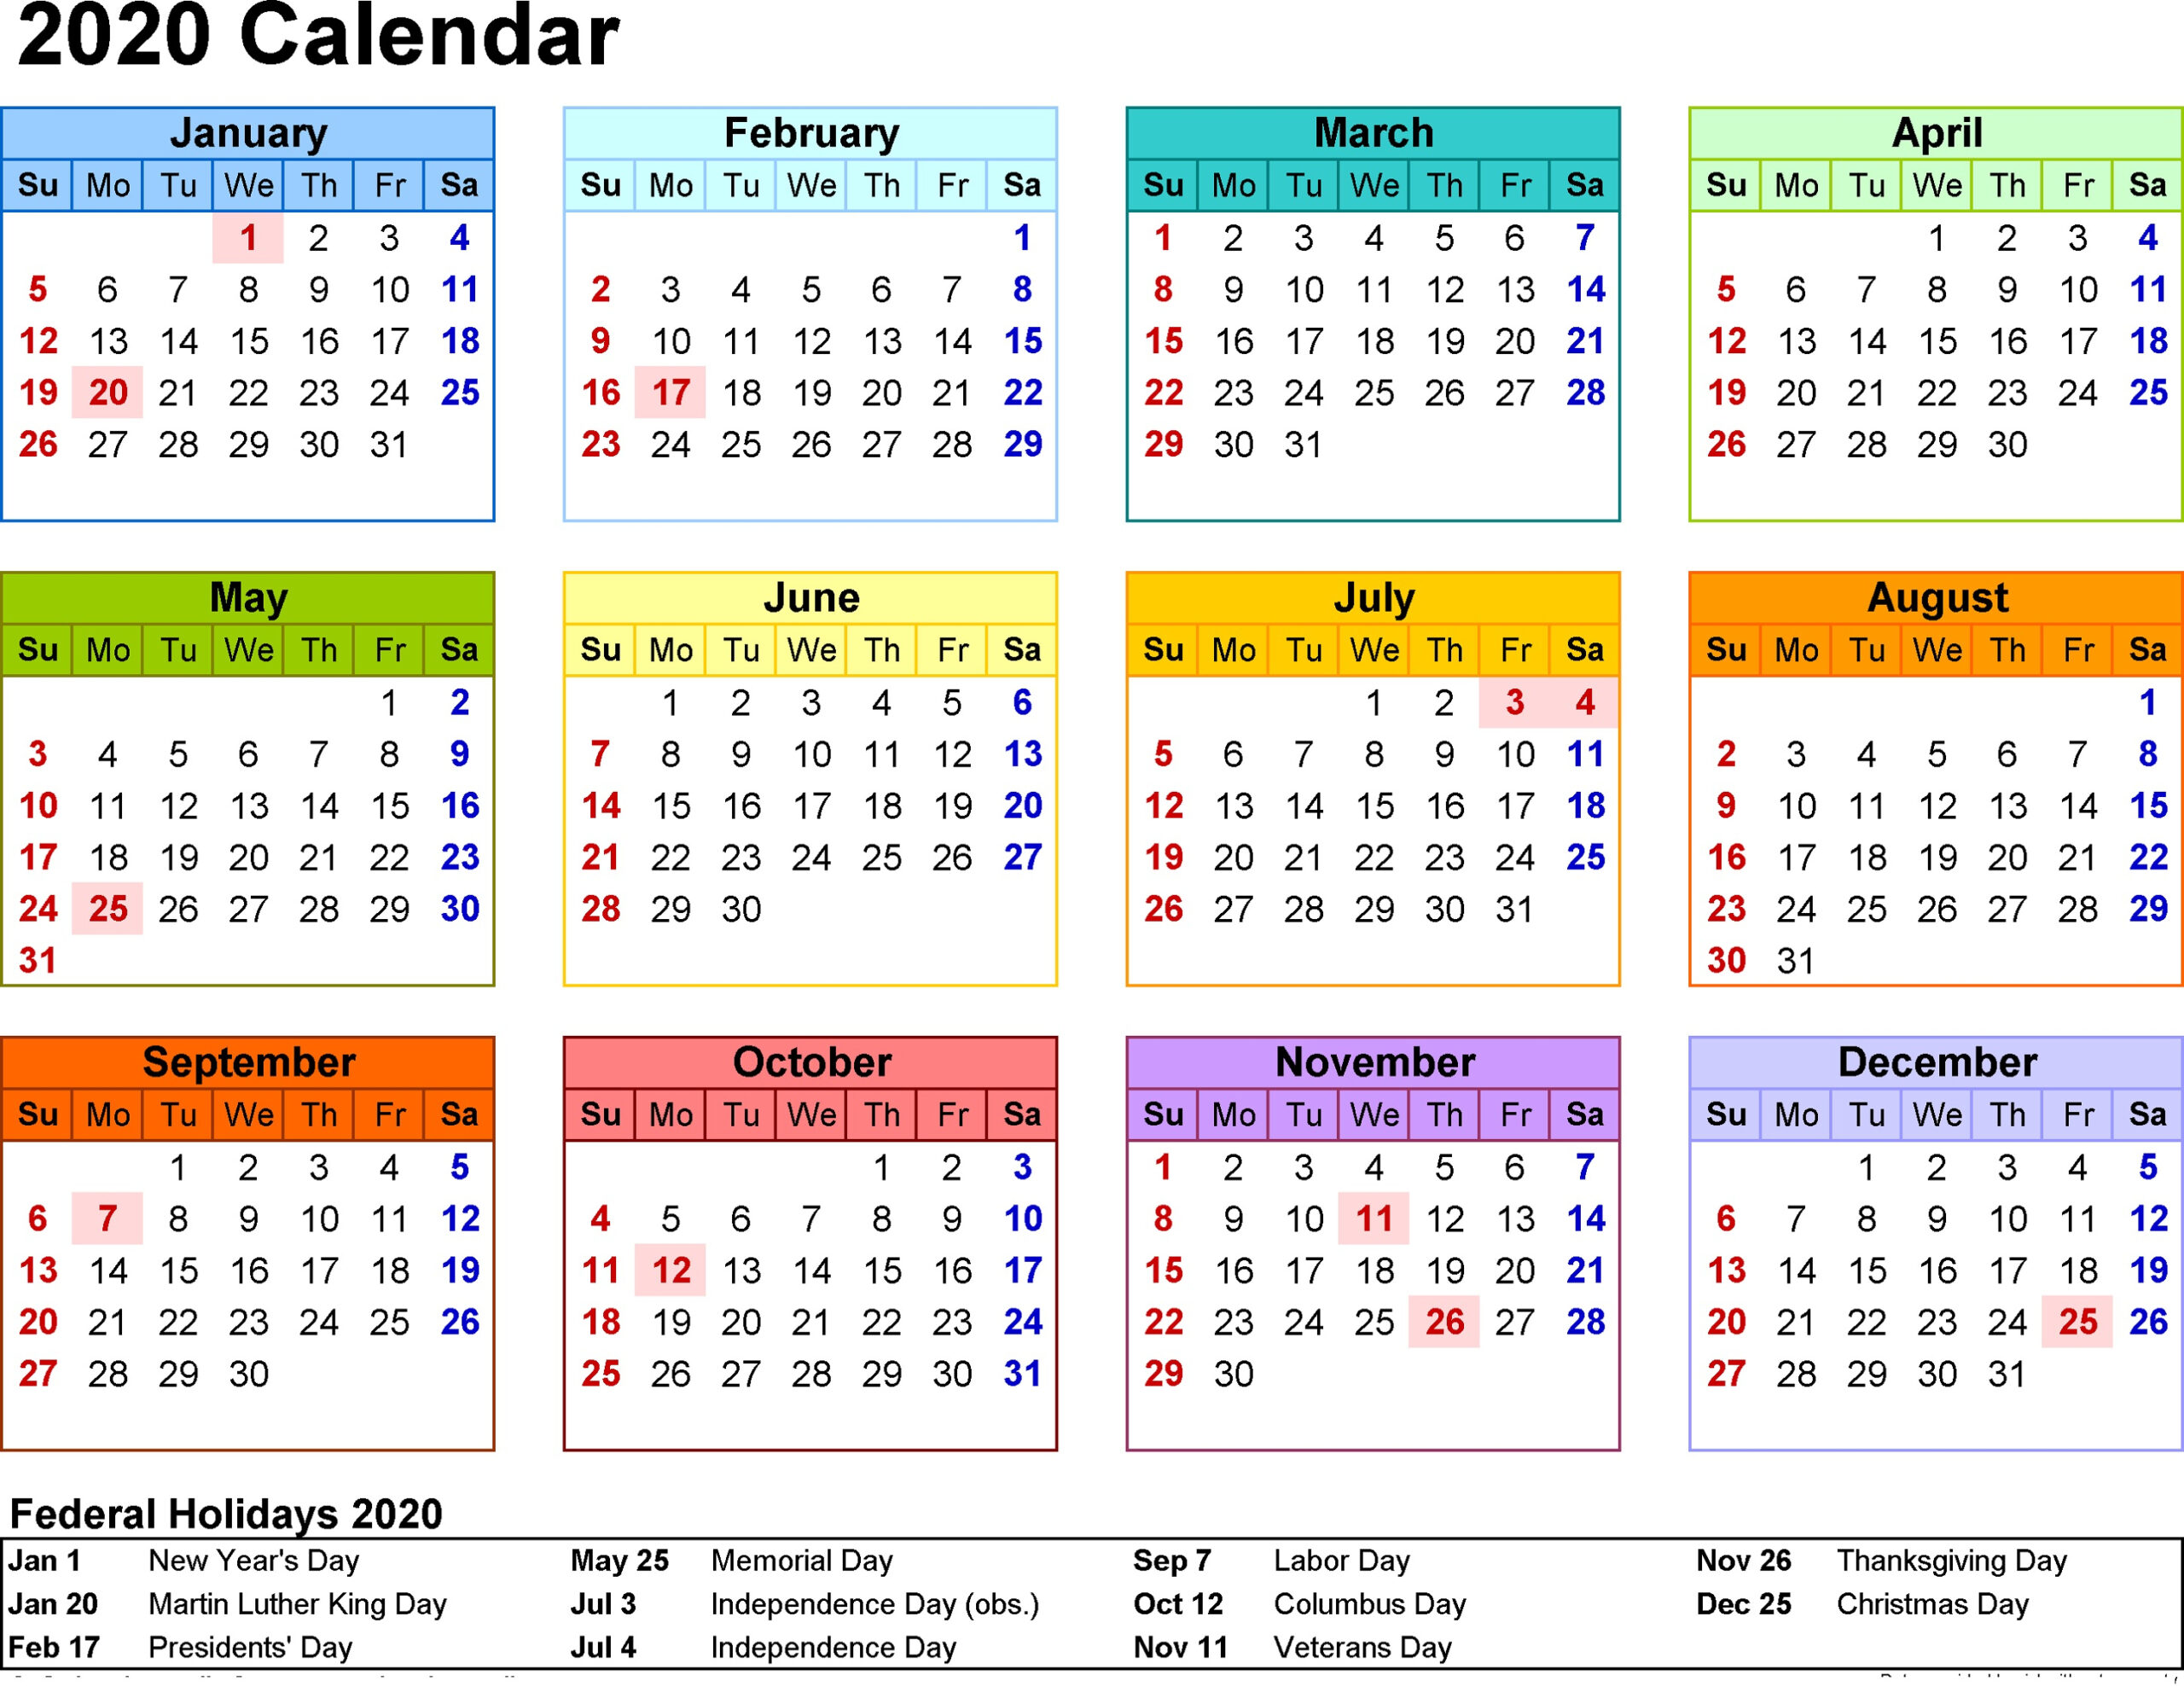 Printable 3 Year Il Caemdar 20202022 | Example Calendar Printable regarding W 9 Form 2022 Printable Pdf Free